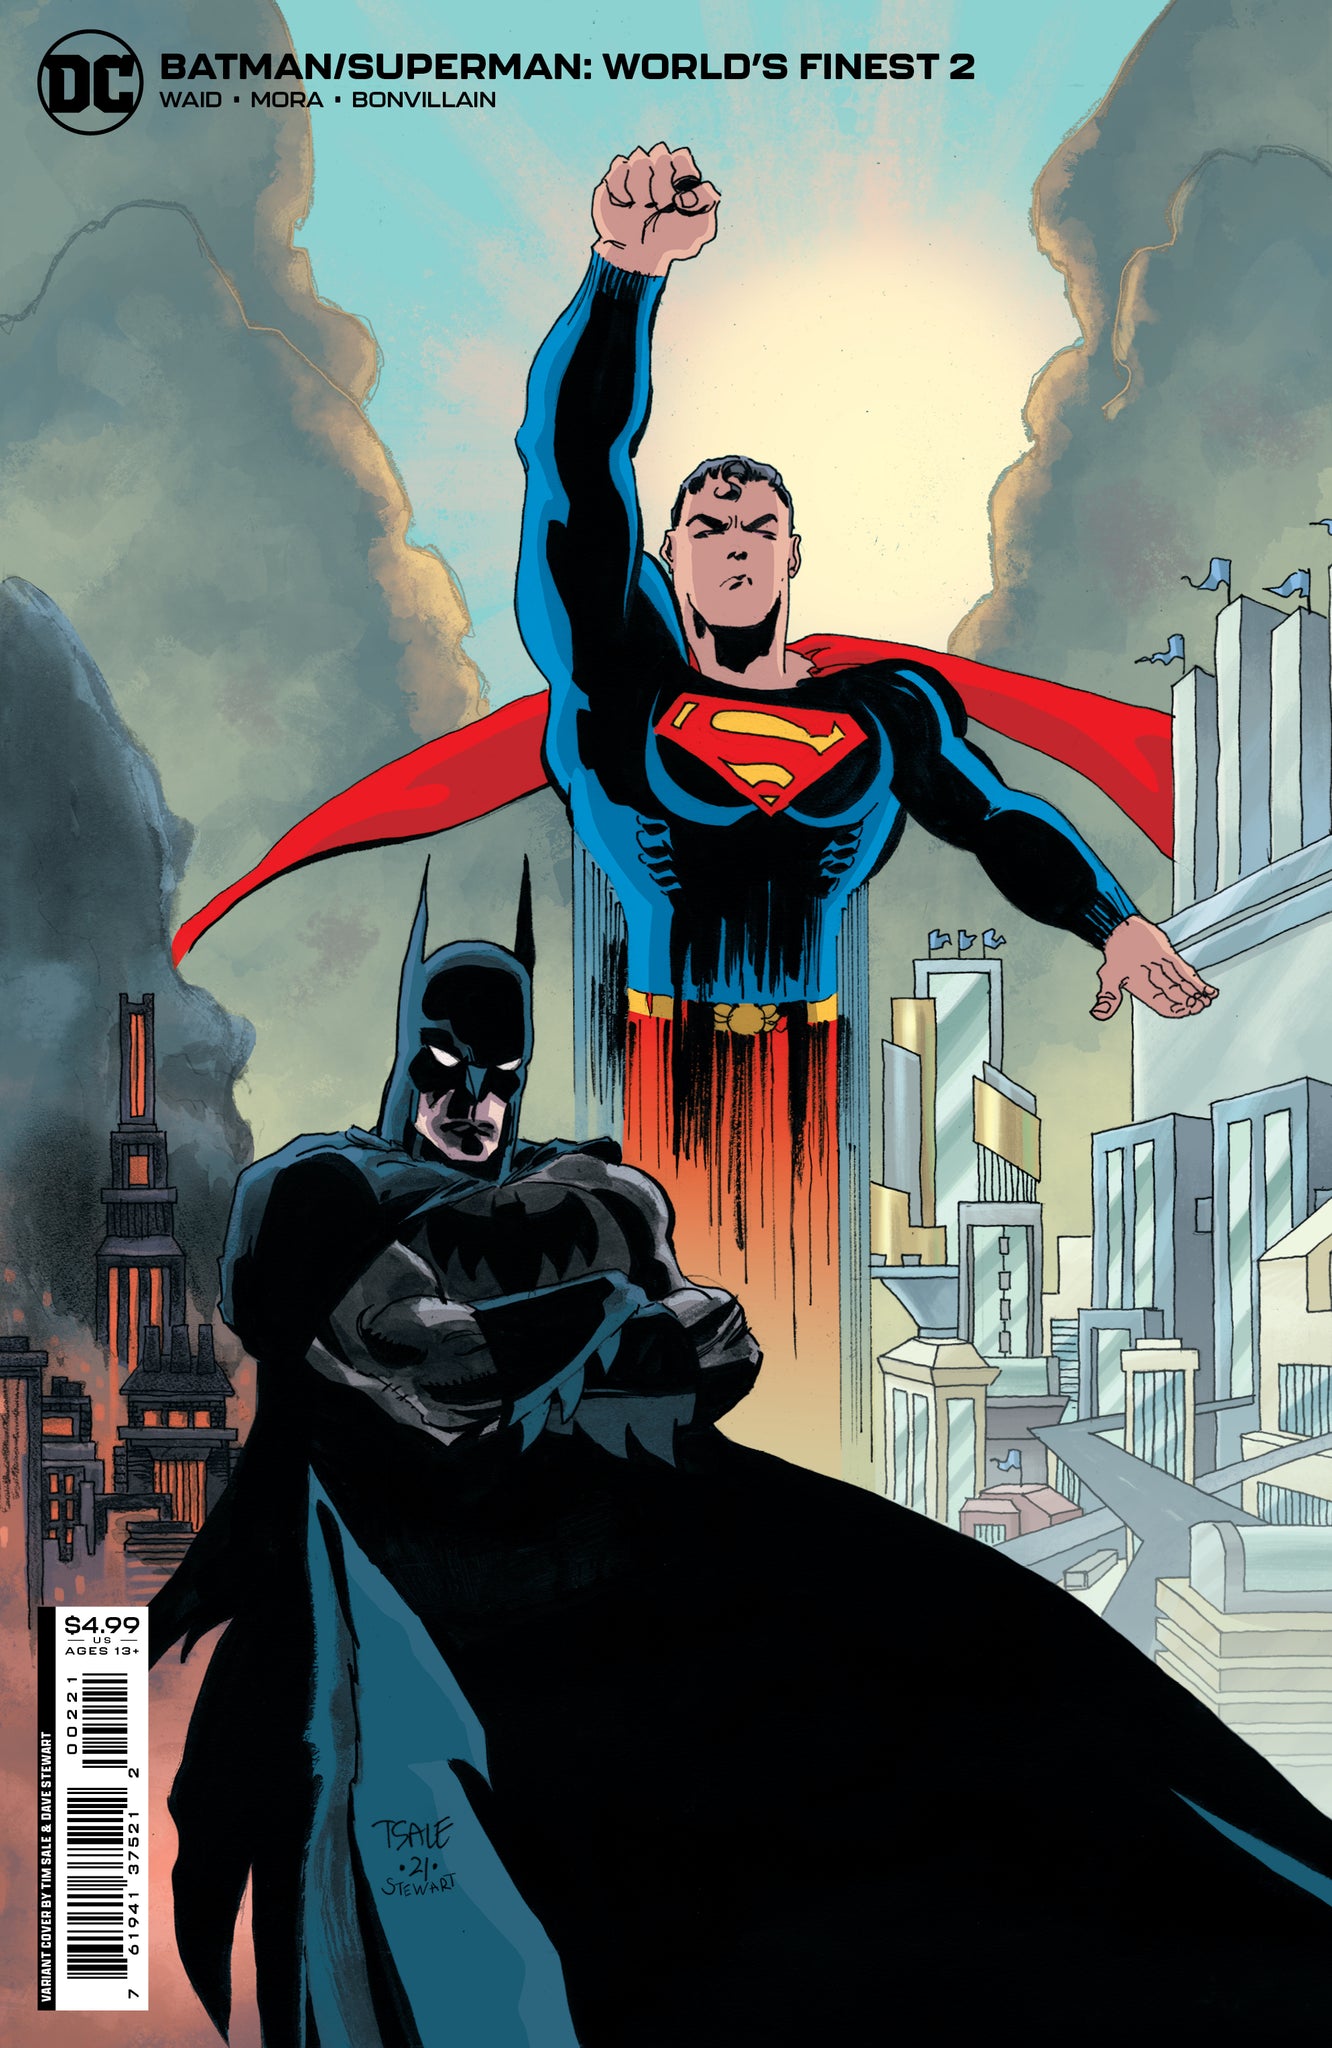 BATMAN SUPERMAN WORLDS FINEST #2